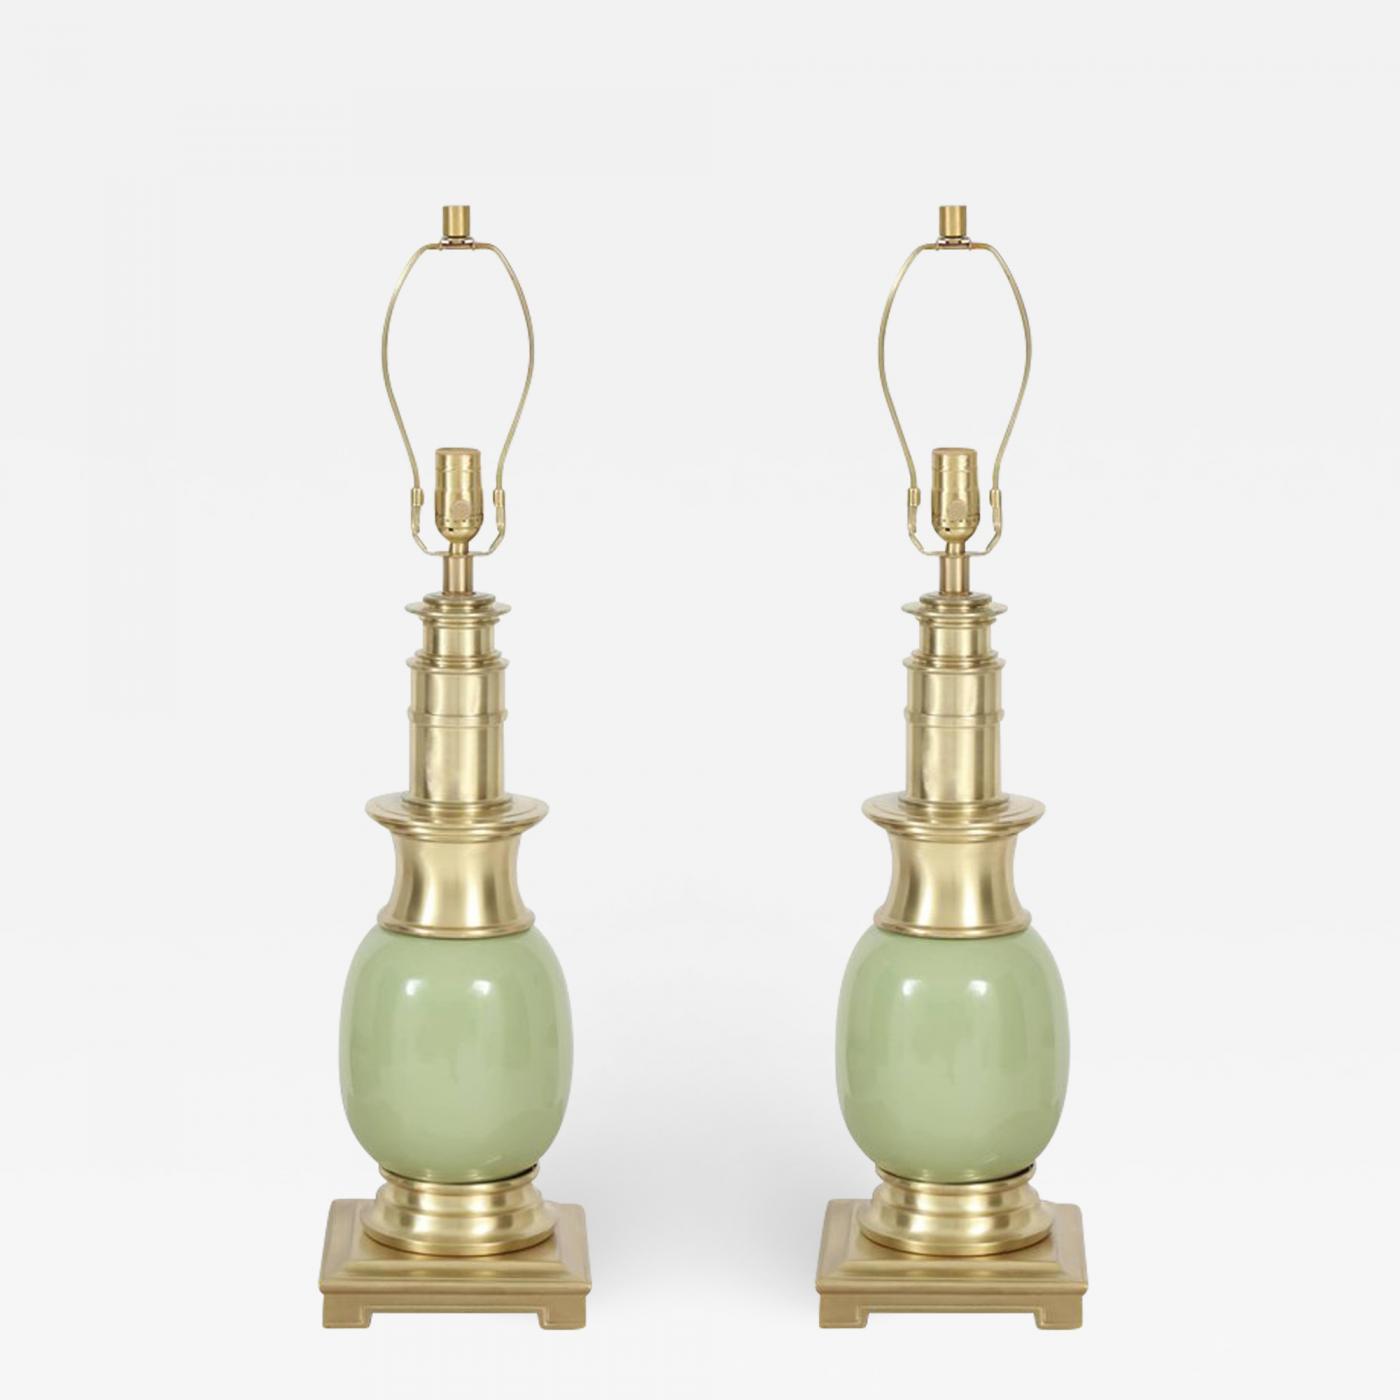 Stiffel Lamp Company - Celadon Green Ceramic, Brass Lamps